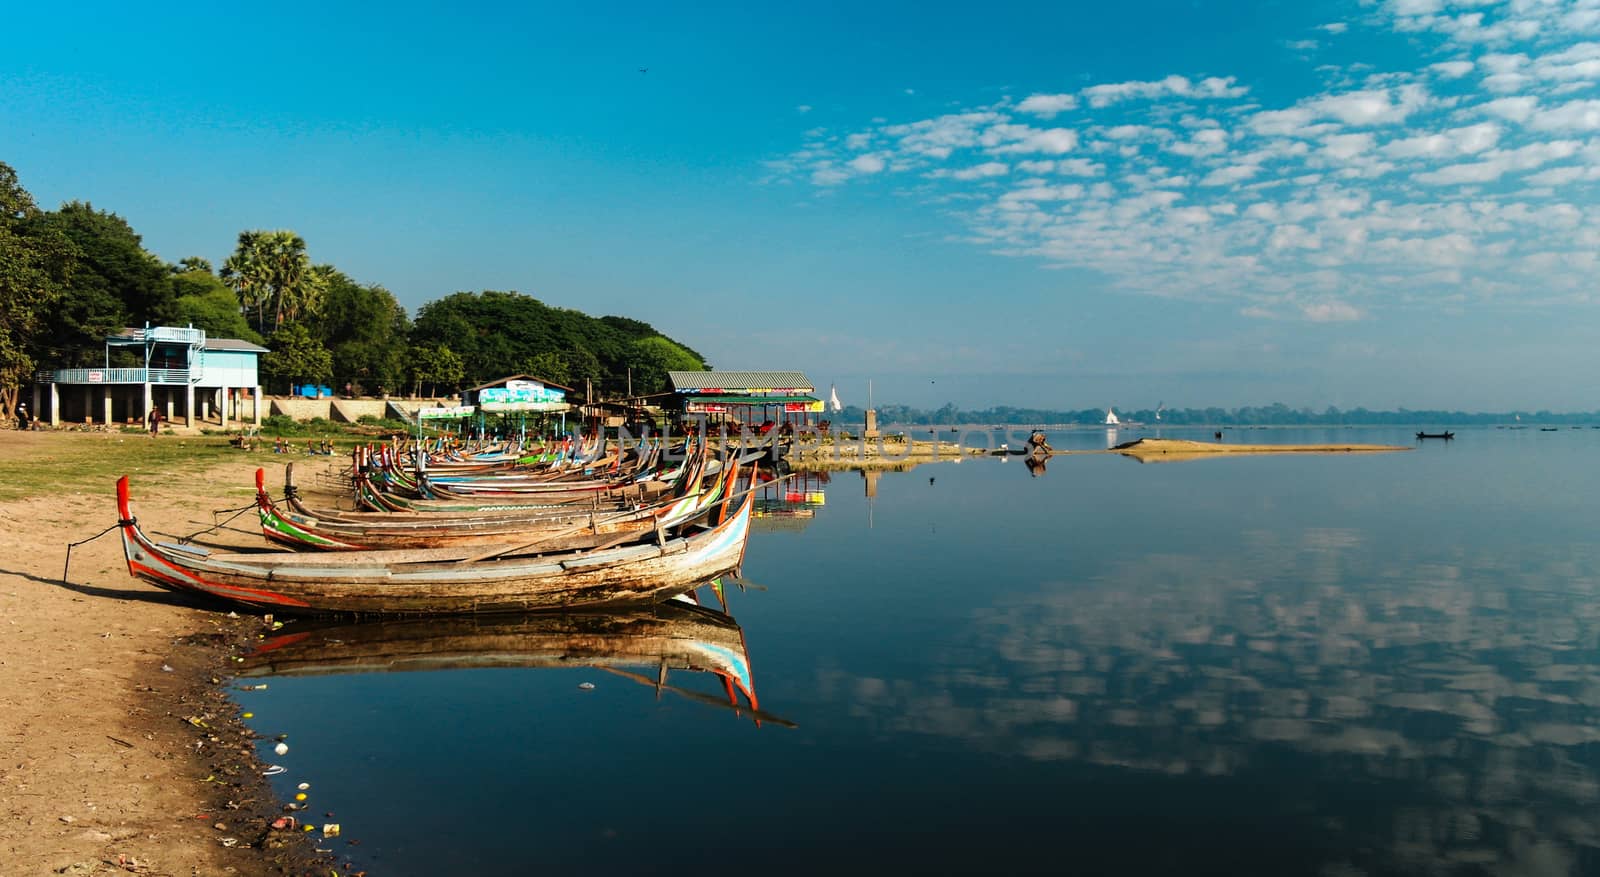 Boats near Taungthaman shore, Amarapura, Myanmar by homocosmicos